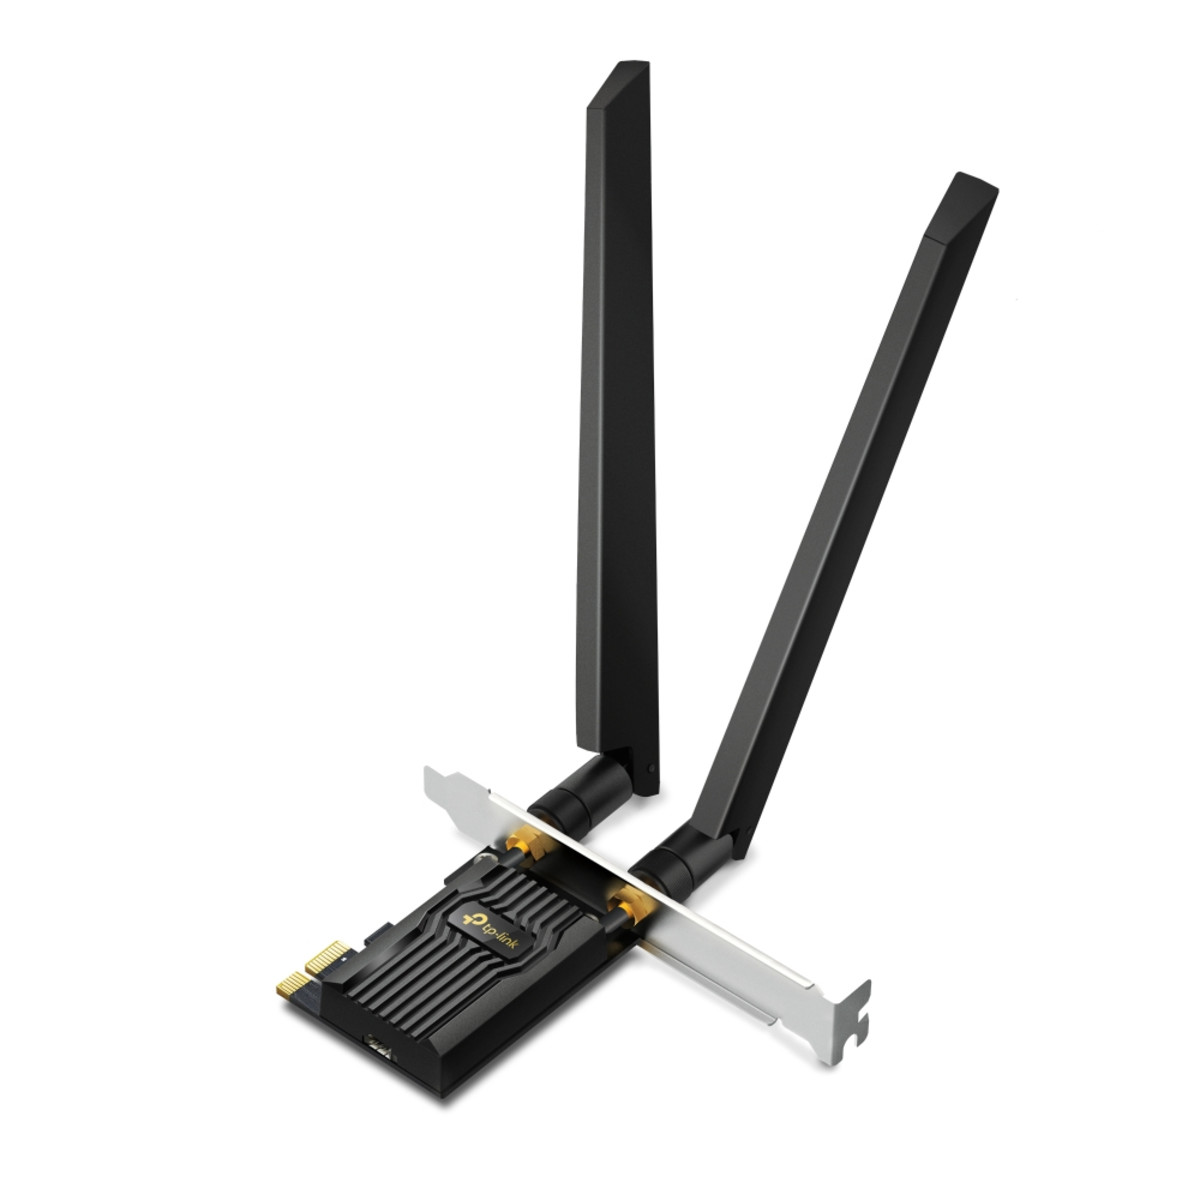 AXE5400 Wi-Fi6E Bluetooth PCIe Adapter